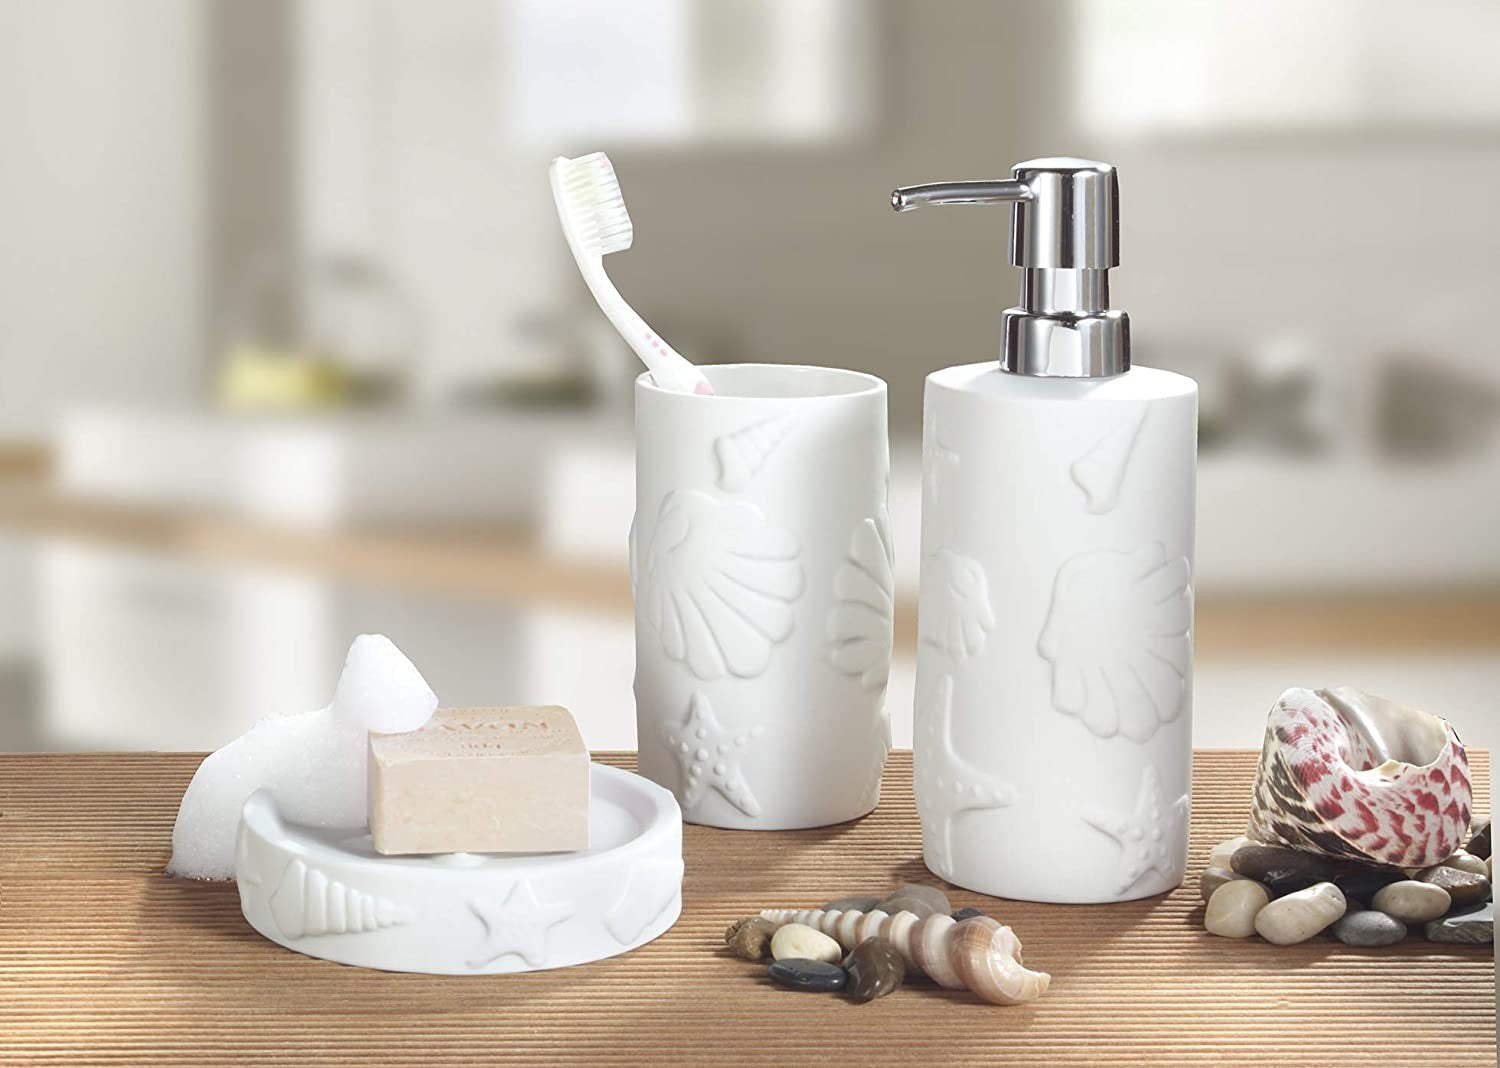 Kleine Wolke Little Cloud Porcelain Soap Dispenser, White - Home & Beyond